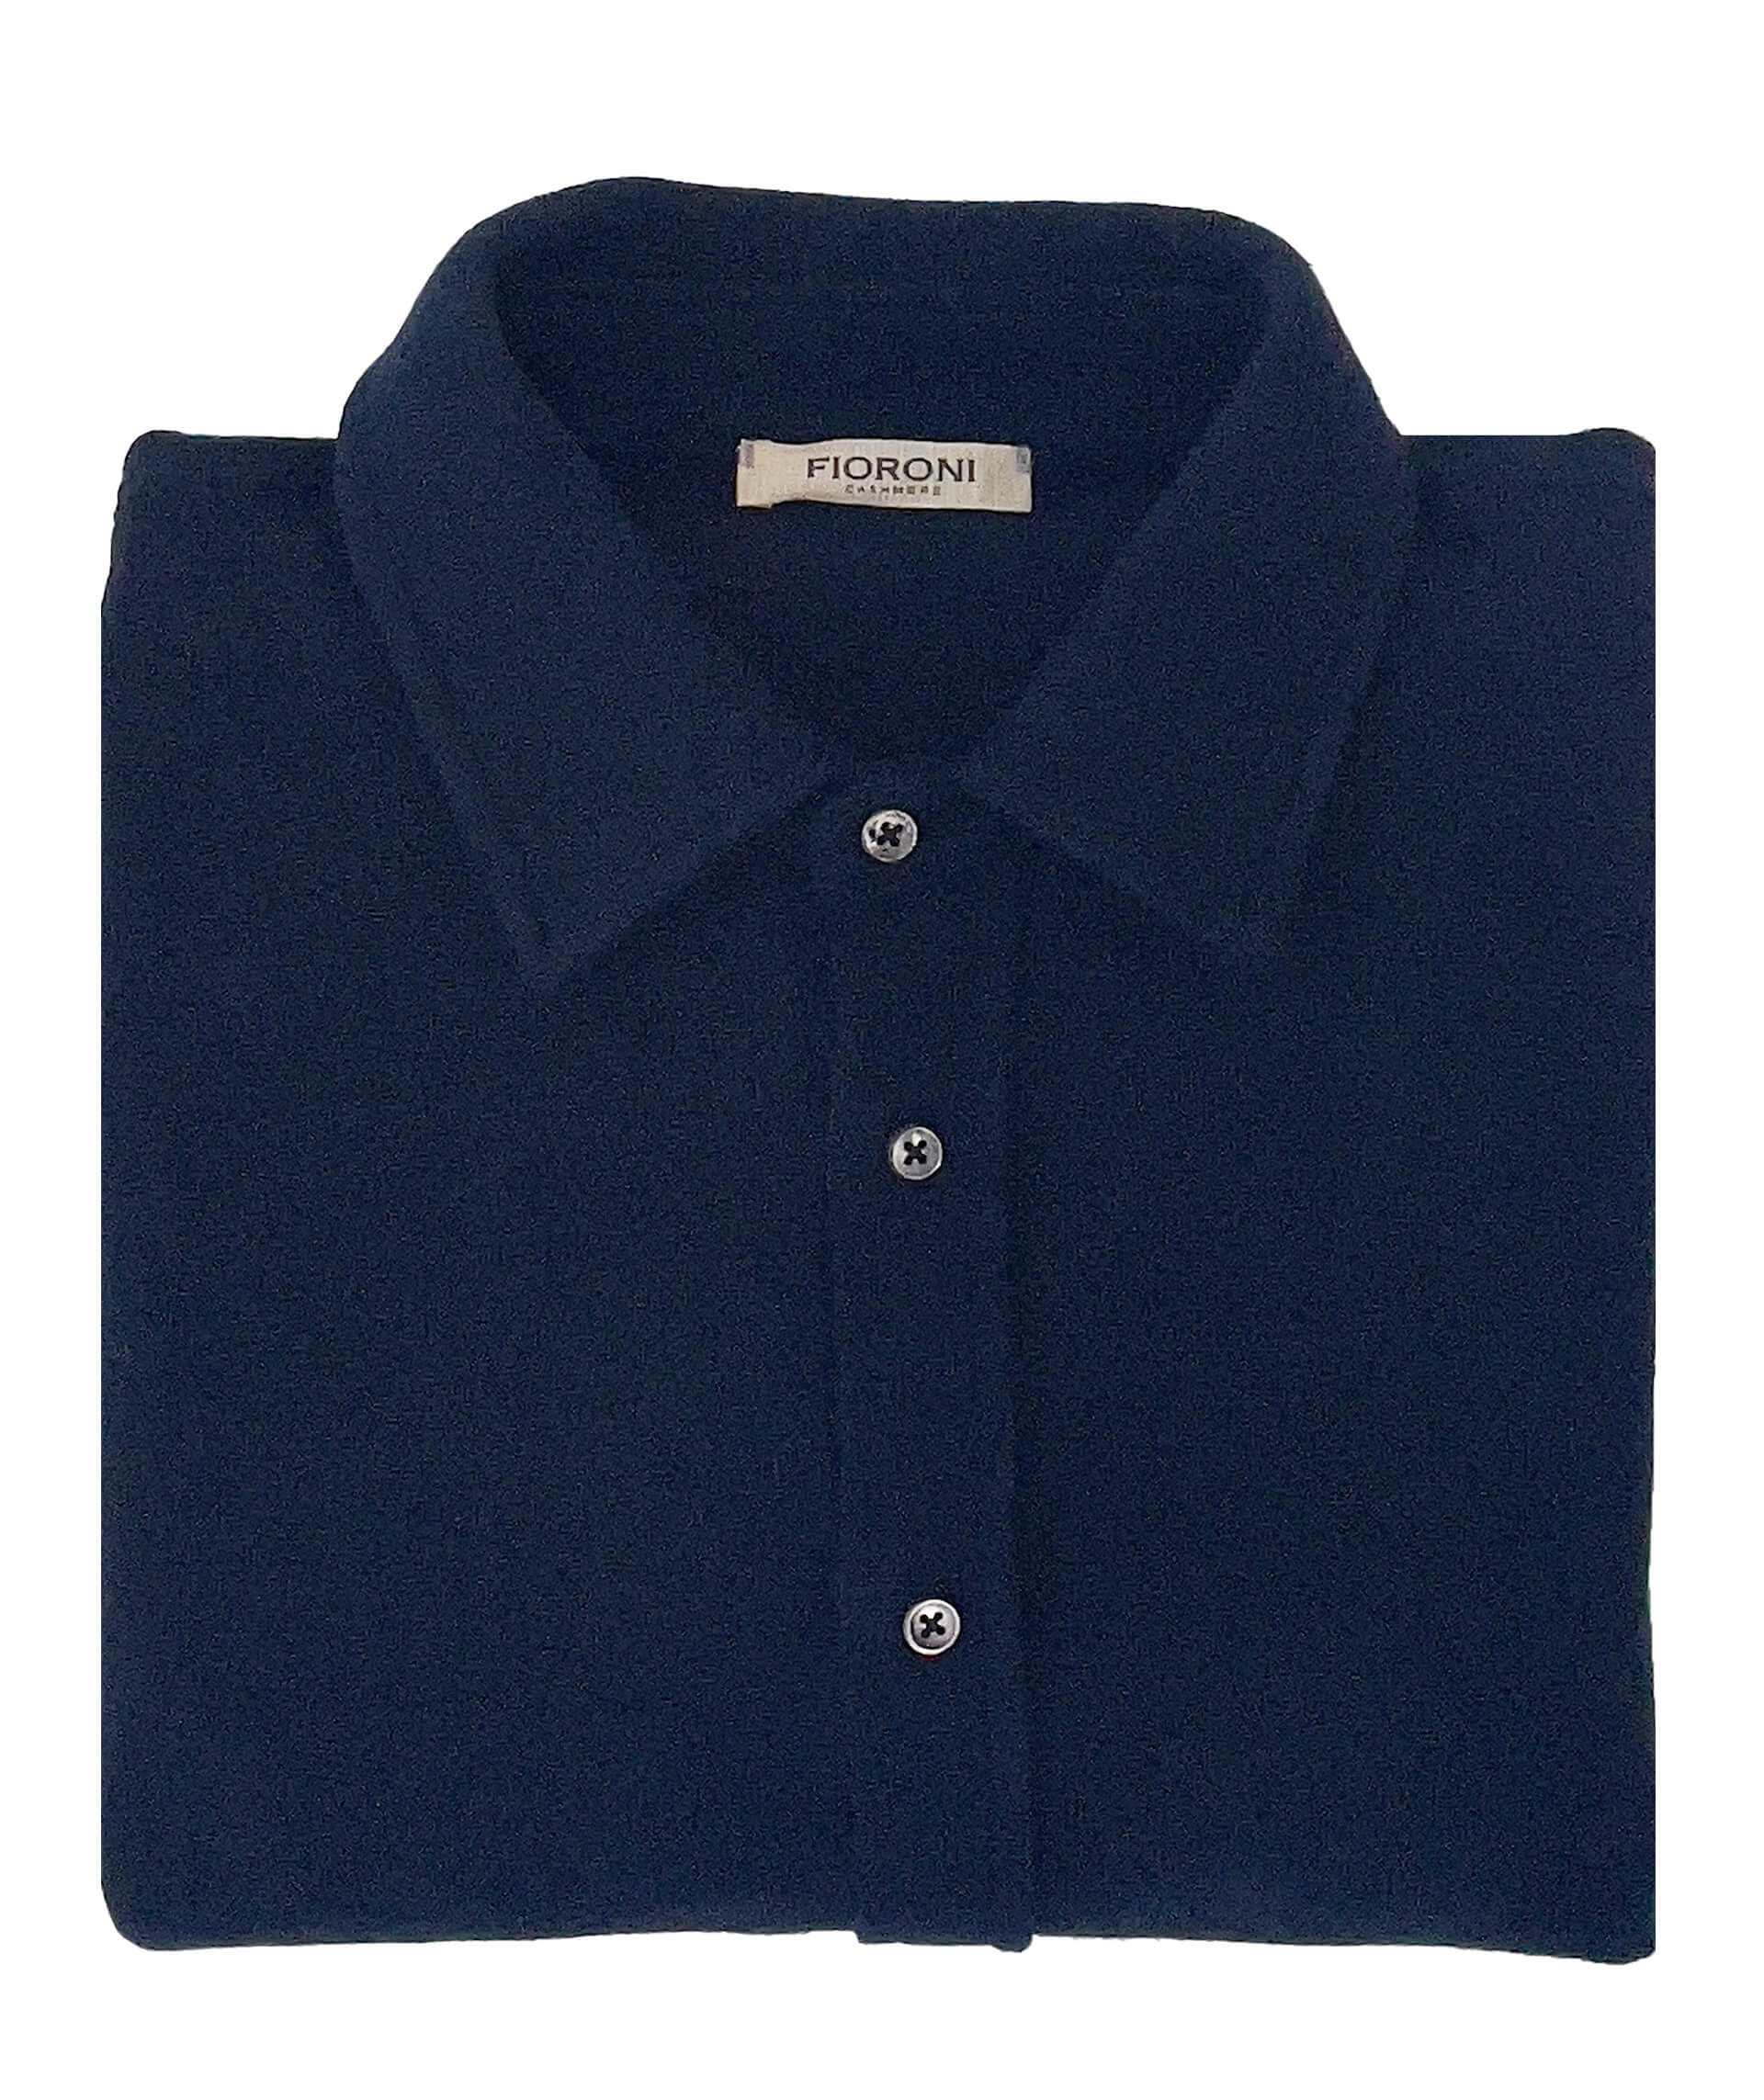 FIORONI CASHMERE Button Front Shirt Style